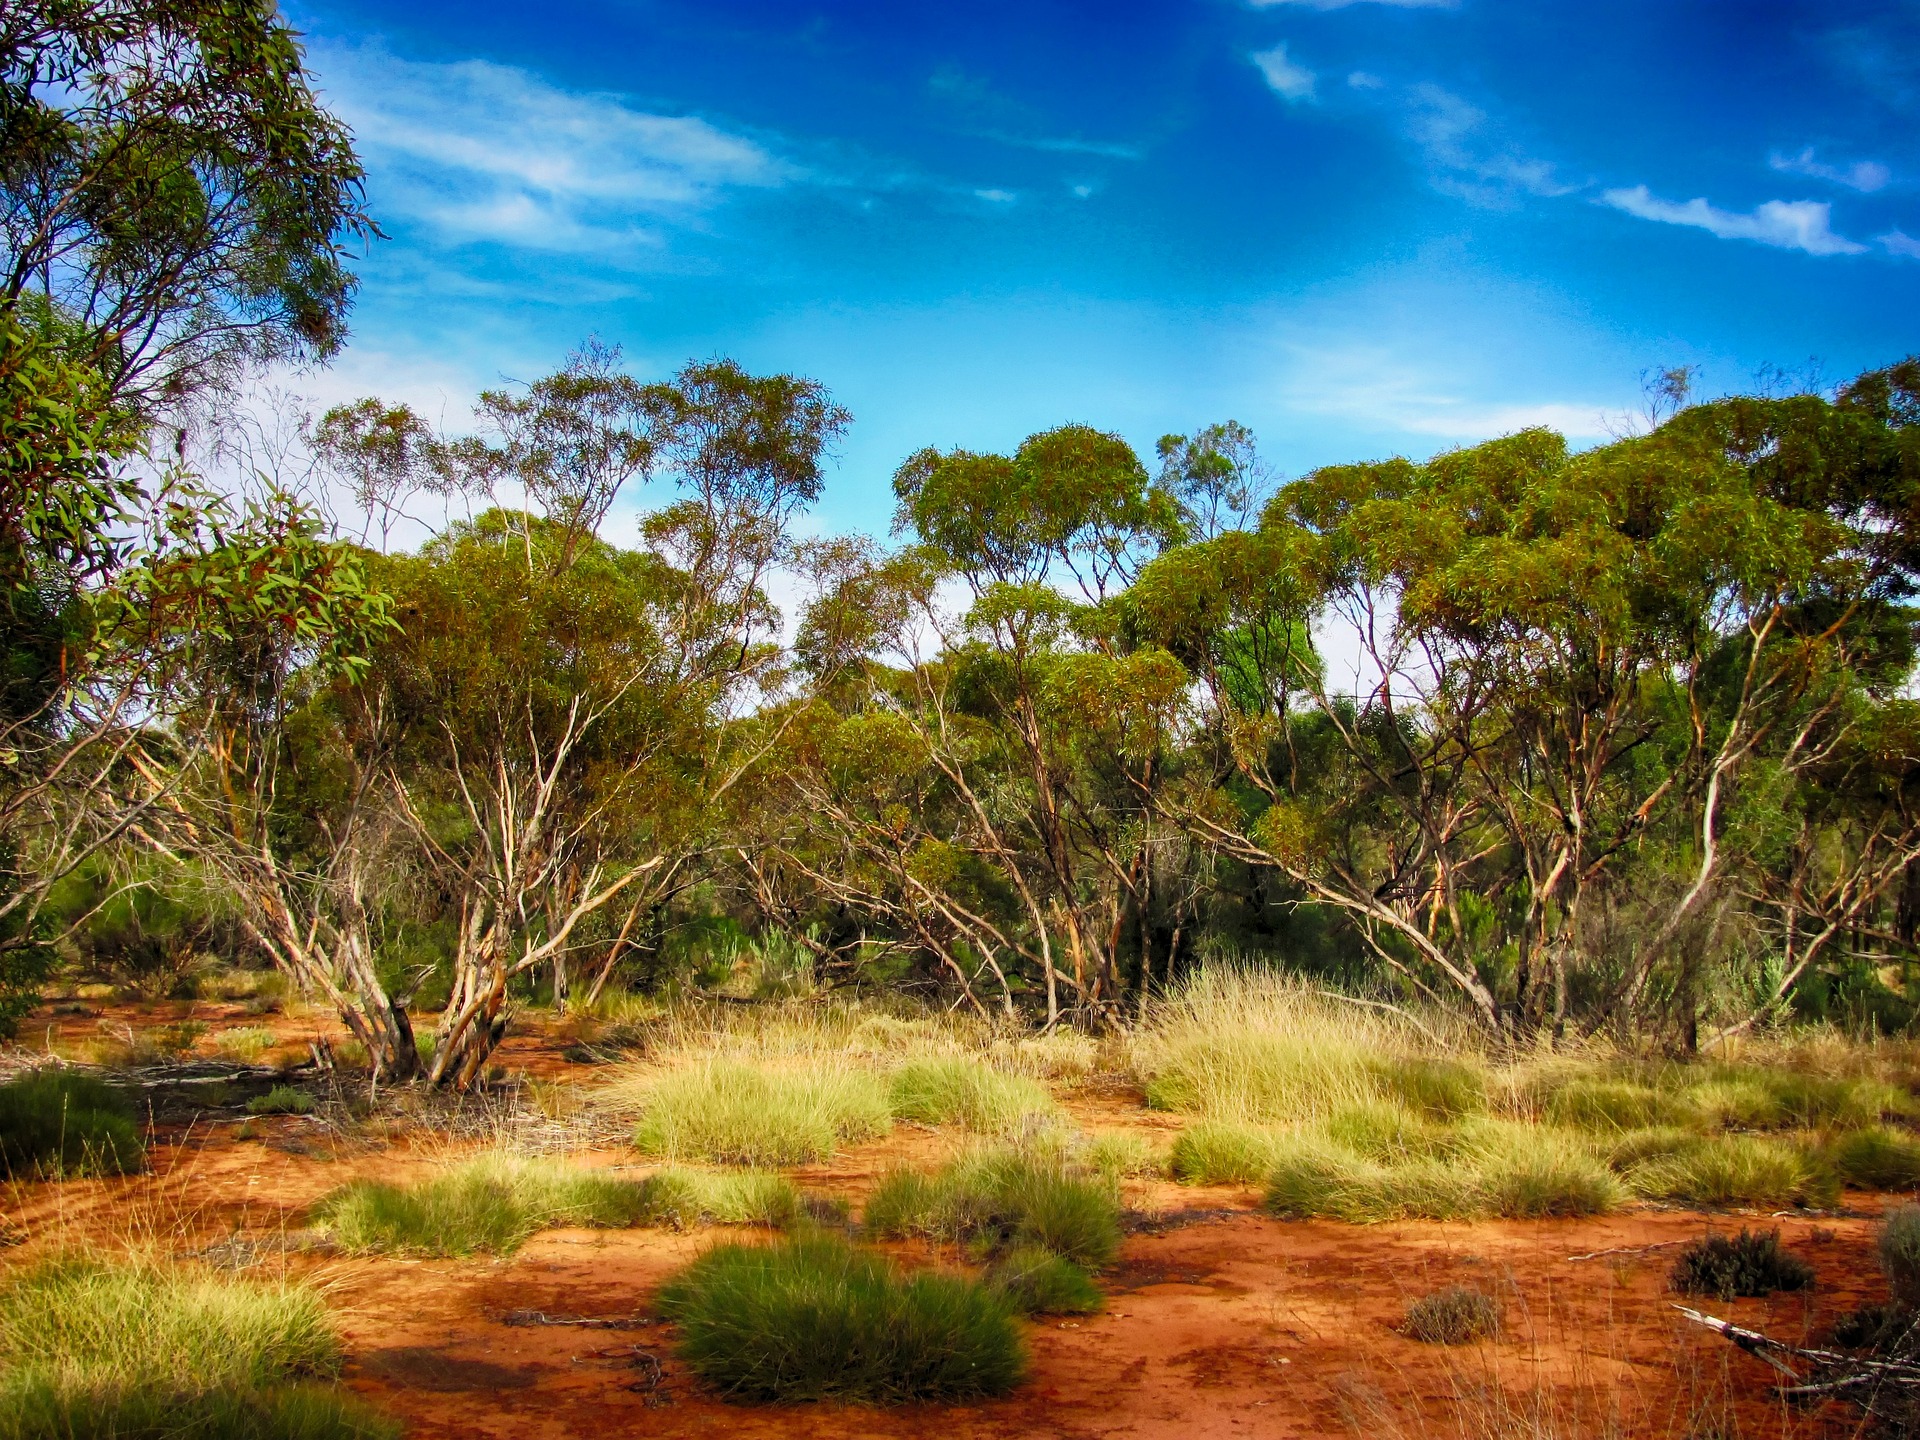 Australia trees, generic landscape - pc - 12019-Pixabay Center for International Law